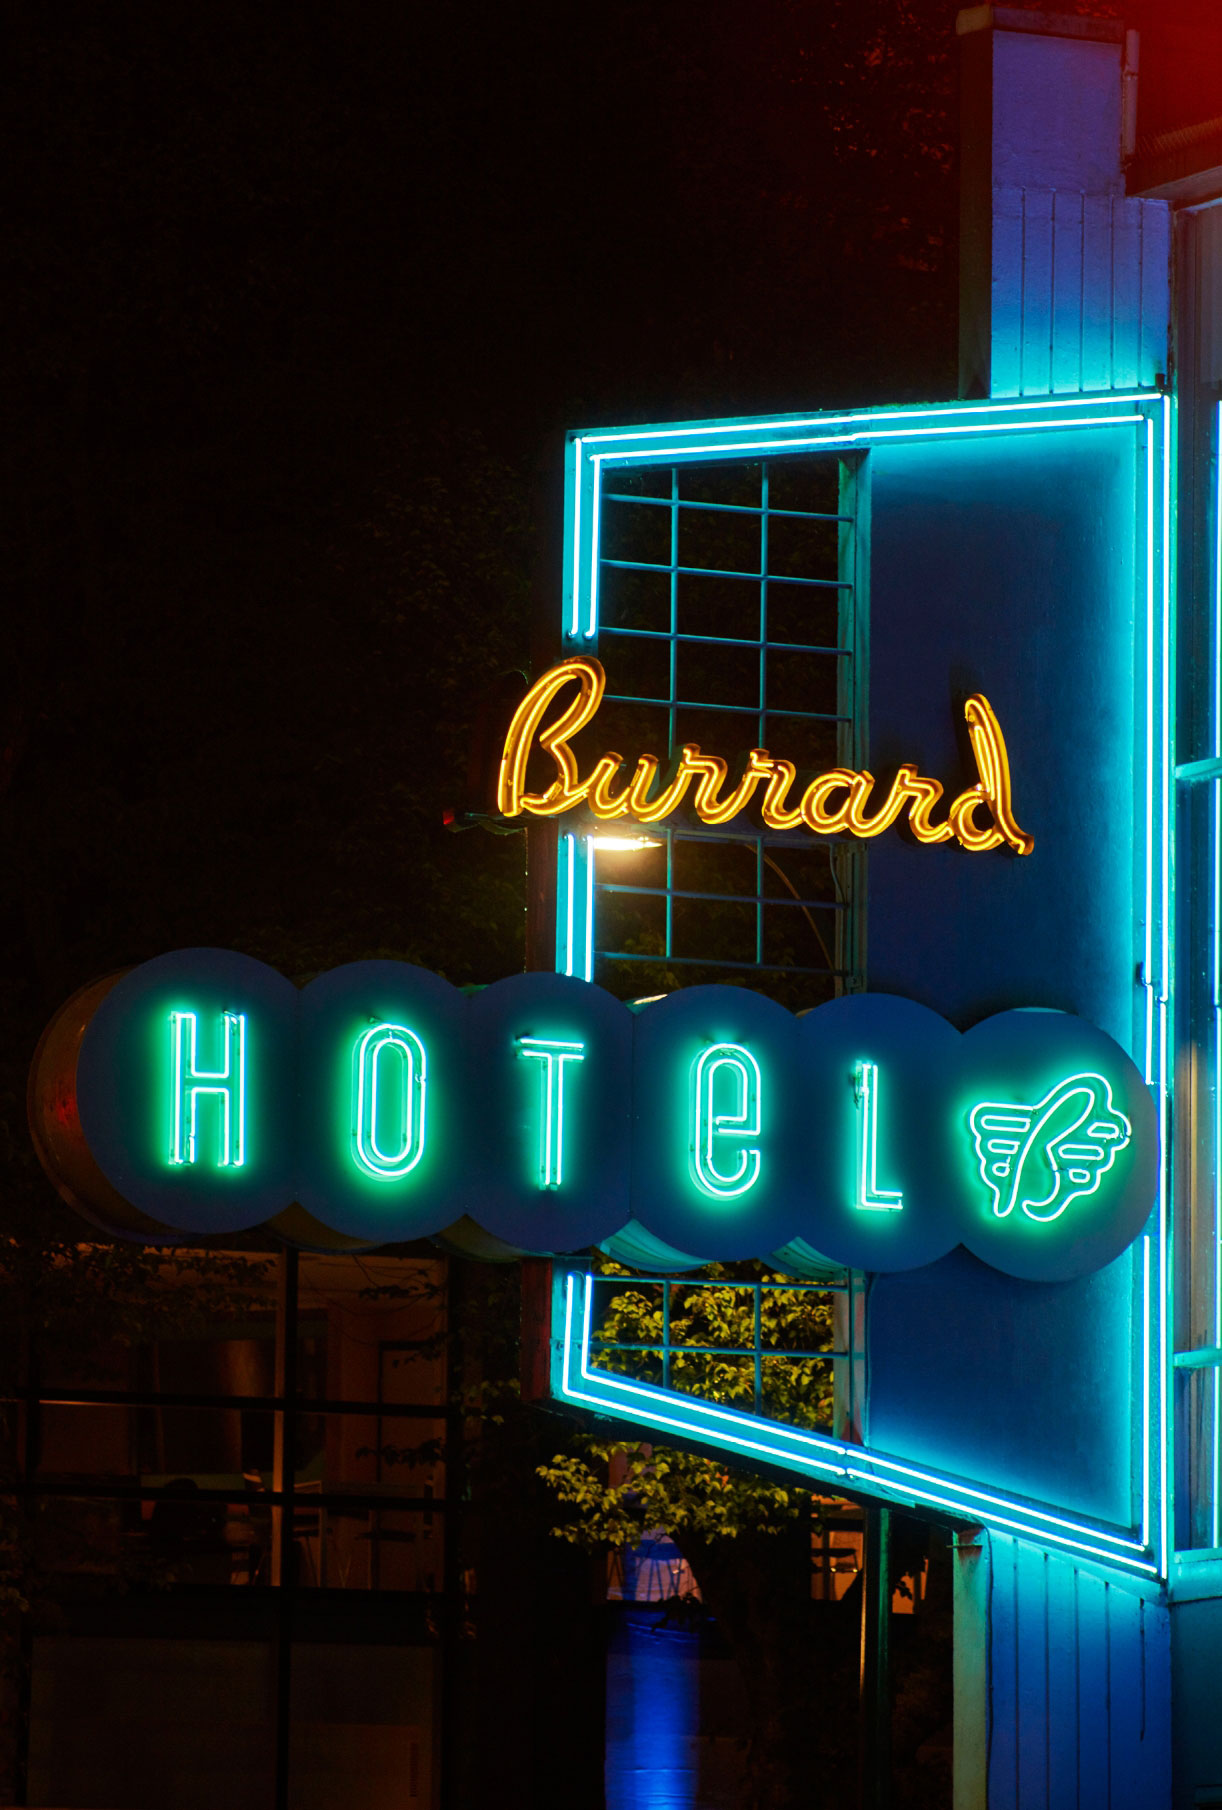 The Burrard Hotel neon sign